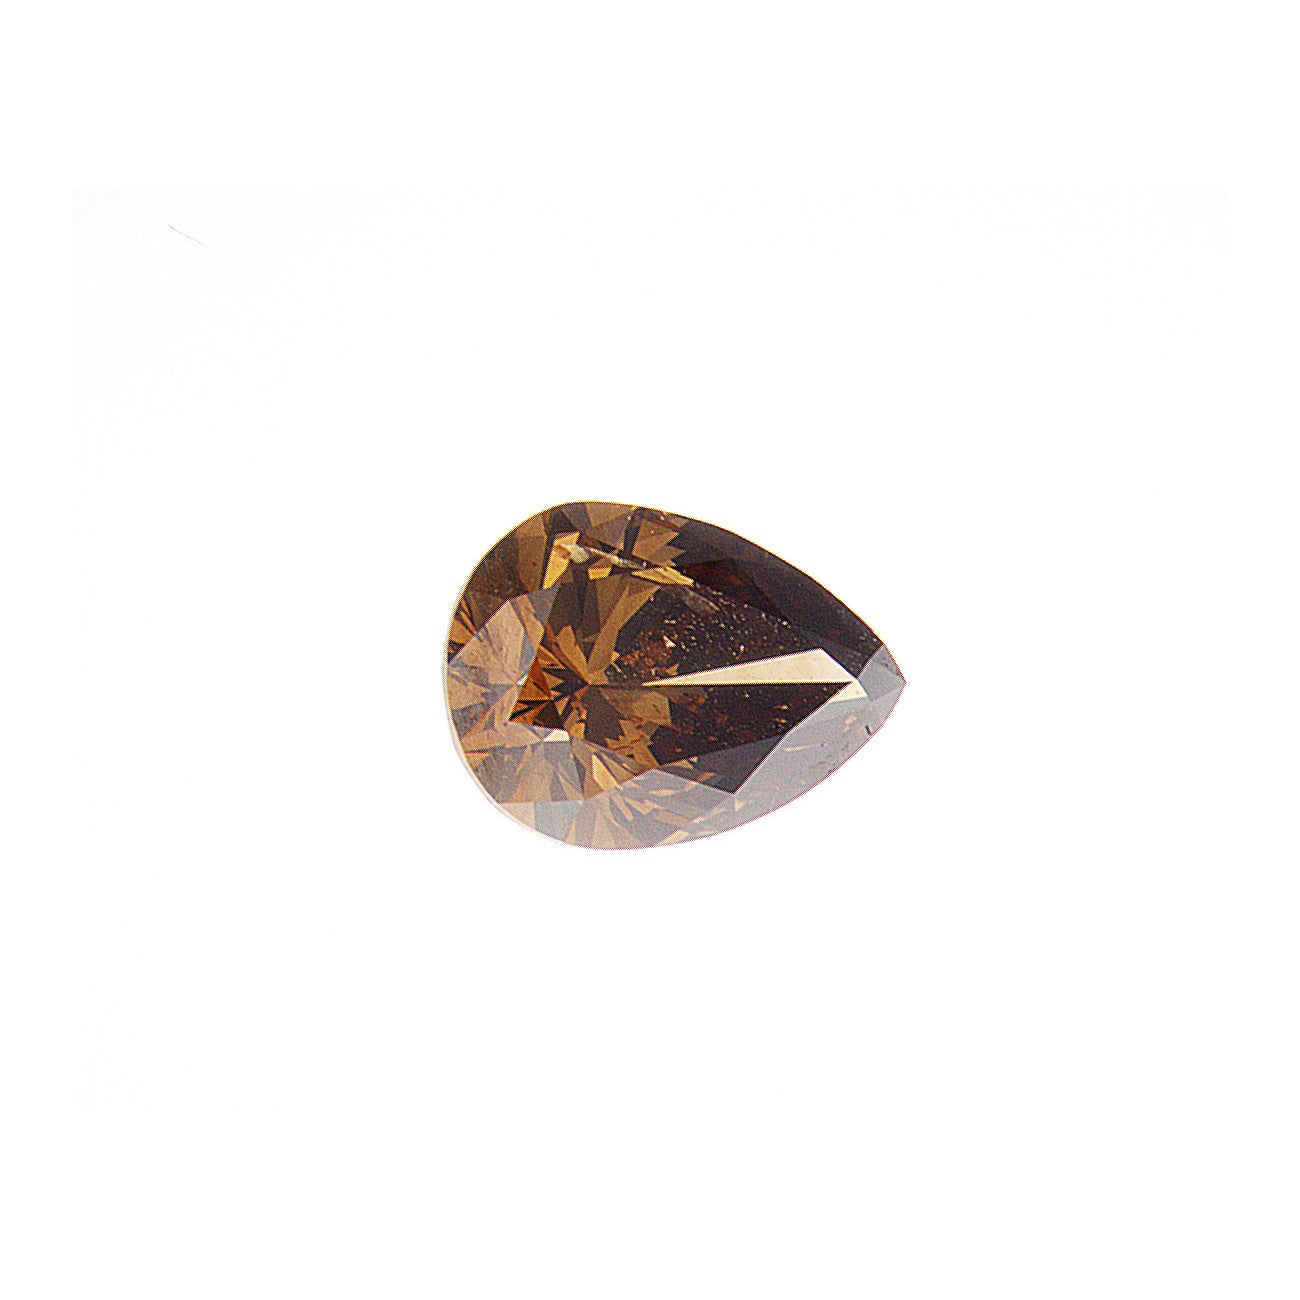 1.42ct Fancy Deep Brown, Pear Shape Diamond, SI2 - 9.27 x 6.50 x 4.05mm